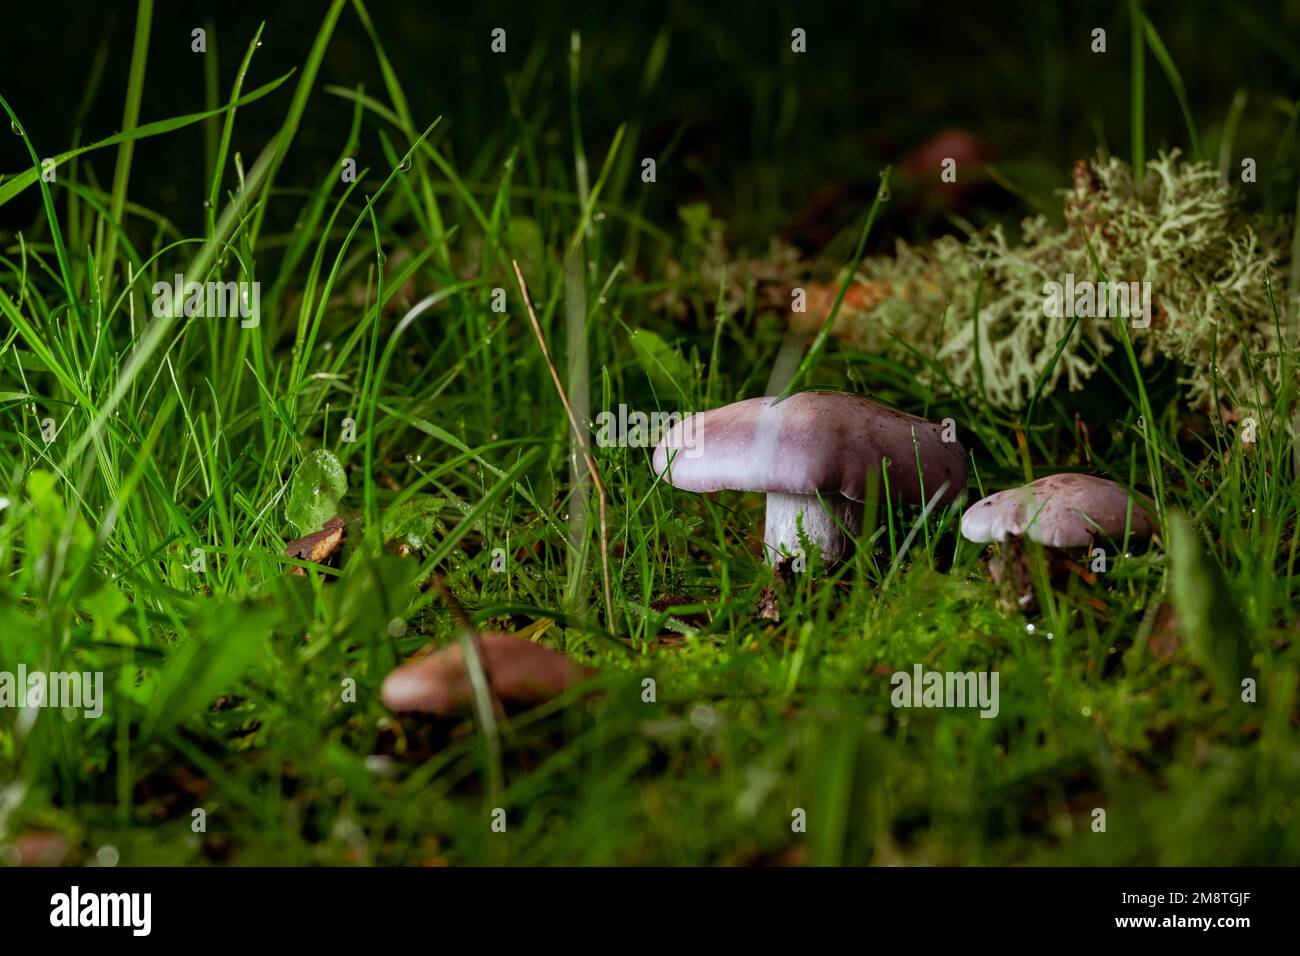 Wood Blewit (Lepista nuda) edible blue mushroom in a forest. Concept mushroom picking, wildlife, edible mushrooms Stock Photo